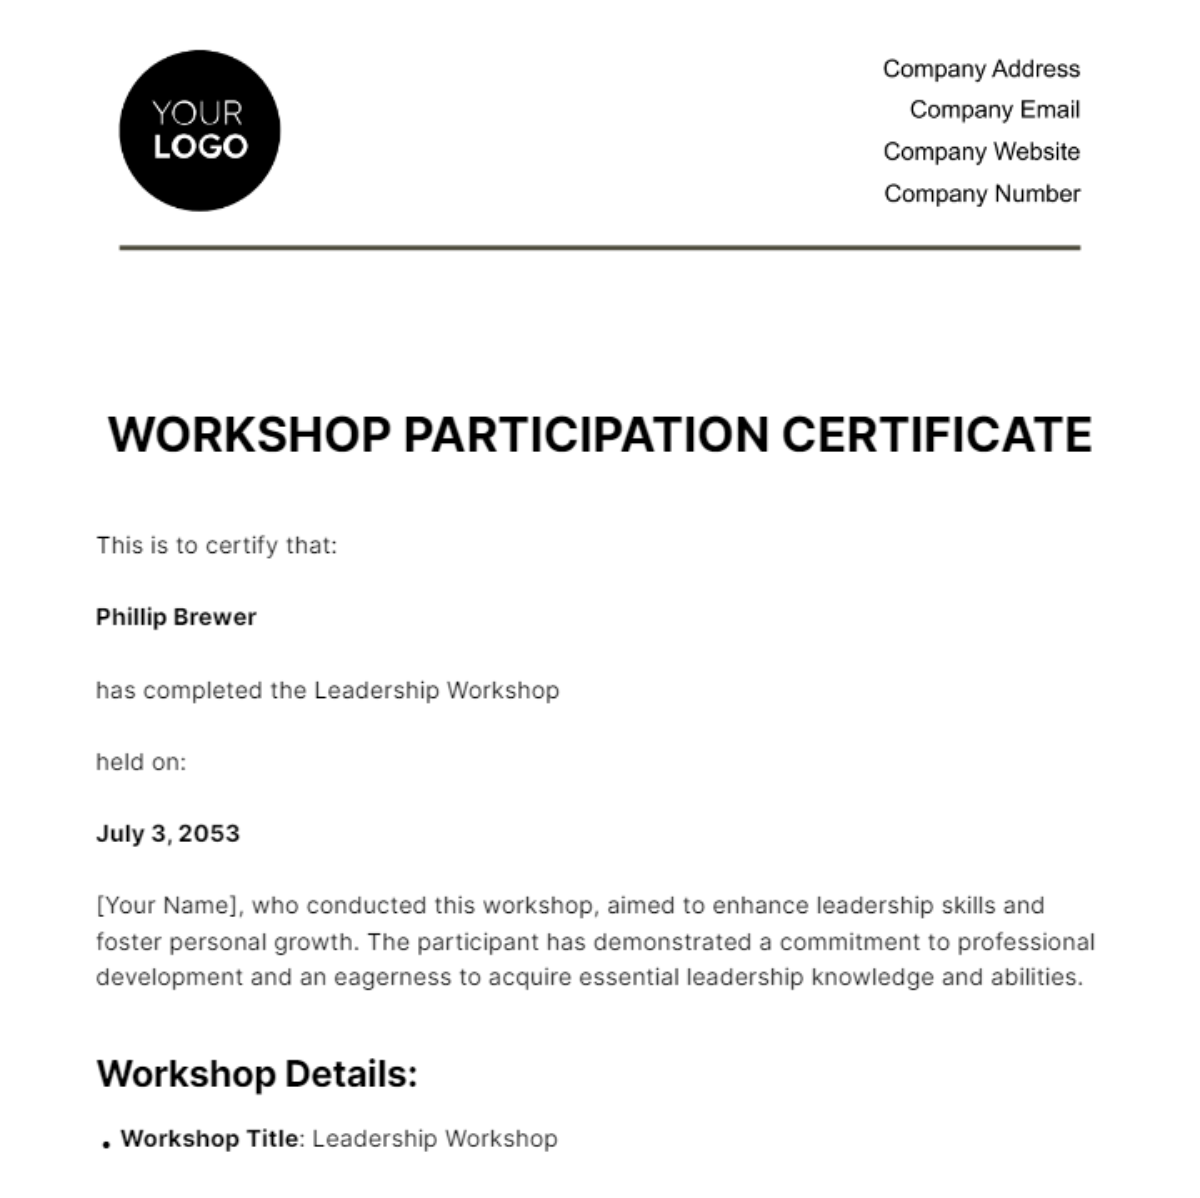 Workshop Participation Certificate HR Template